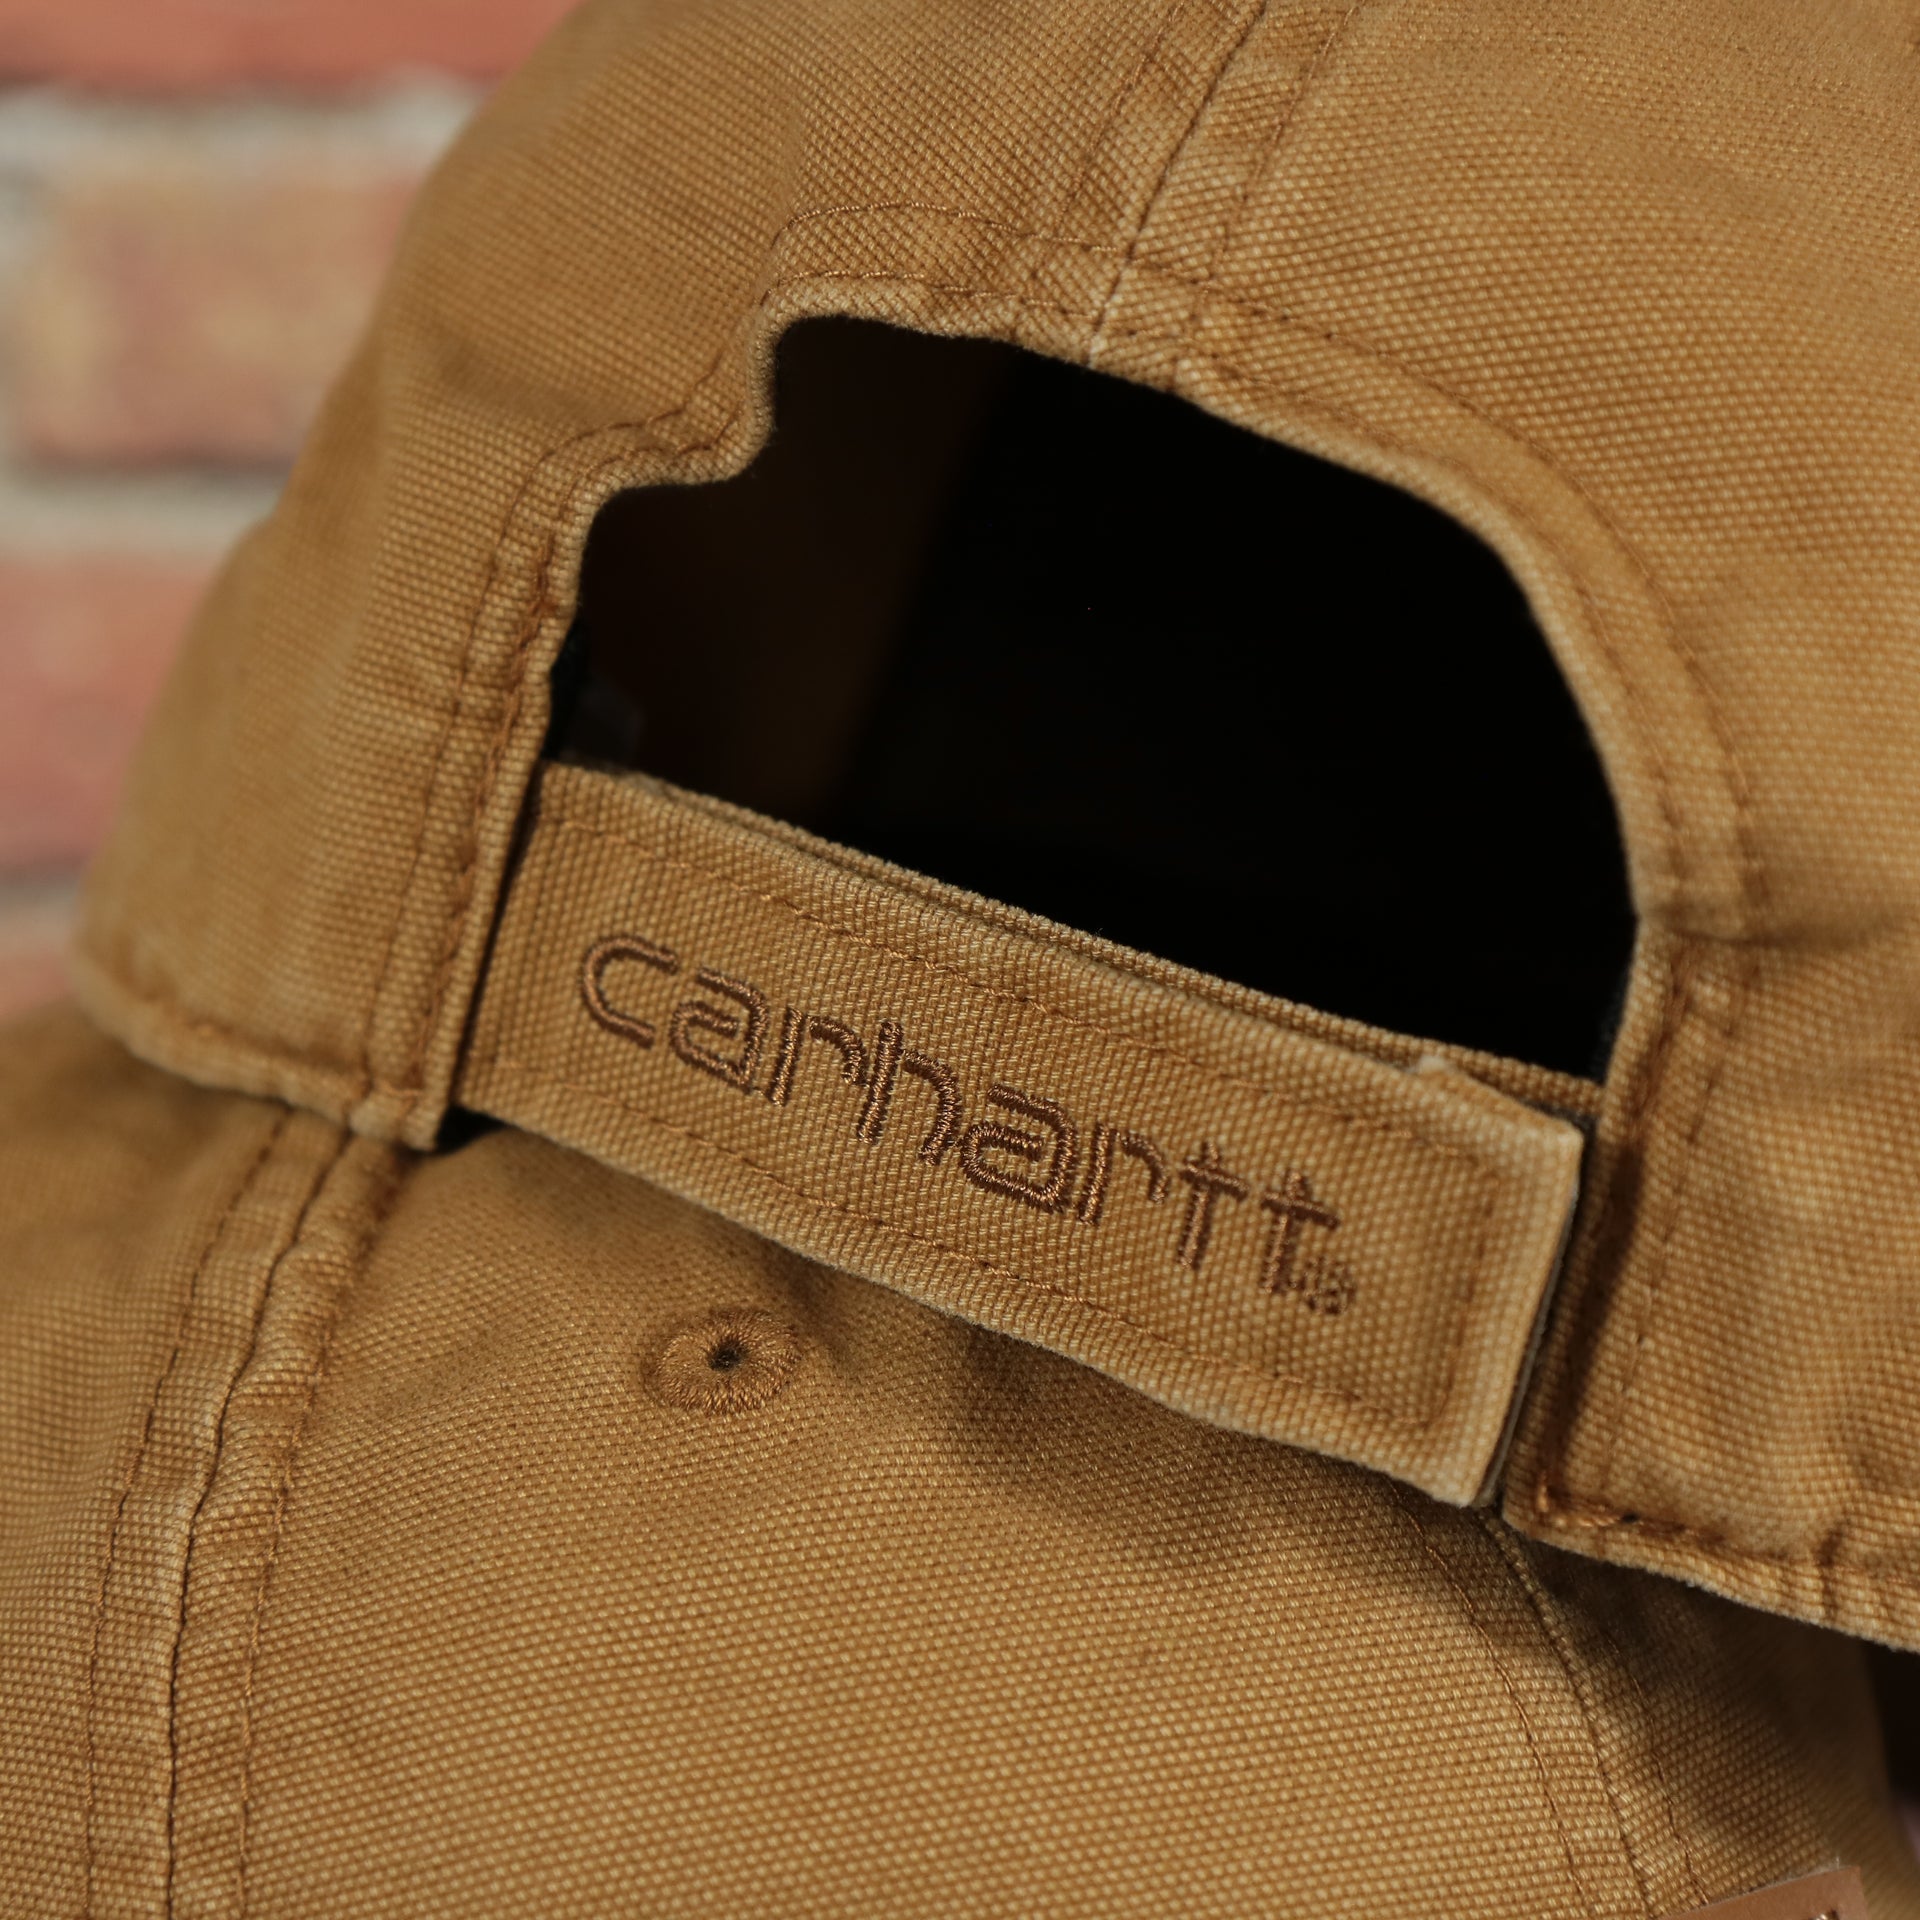 adjustable strap on the Carhartt Dad Hat | Carhartt Brown Baseball Cap